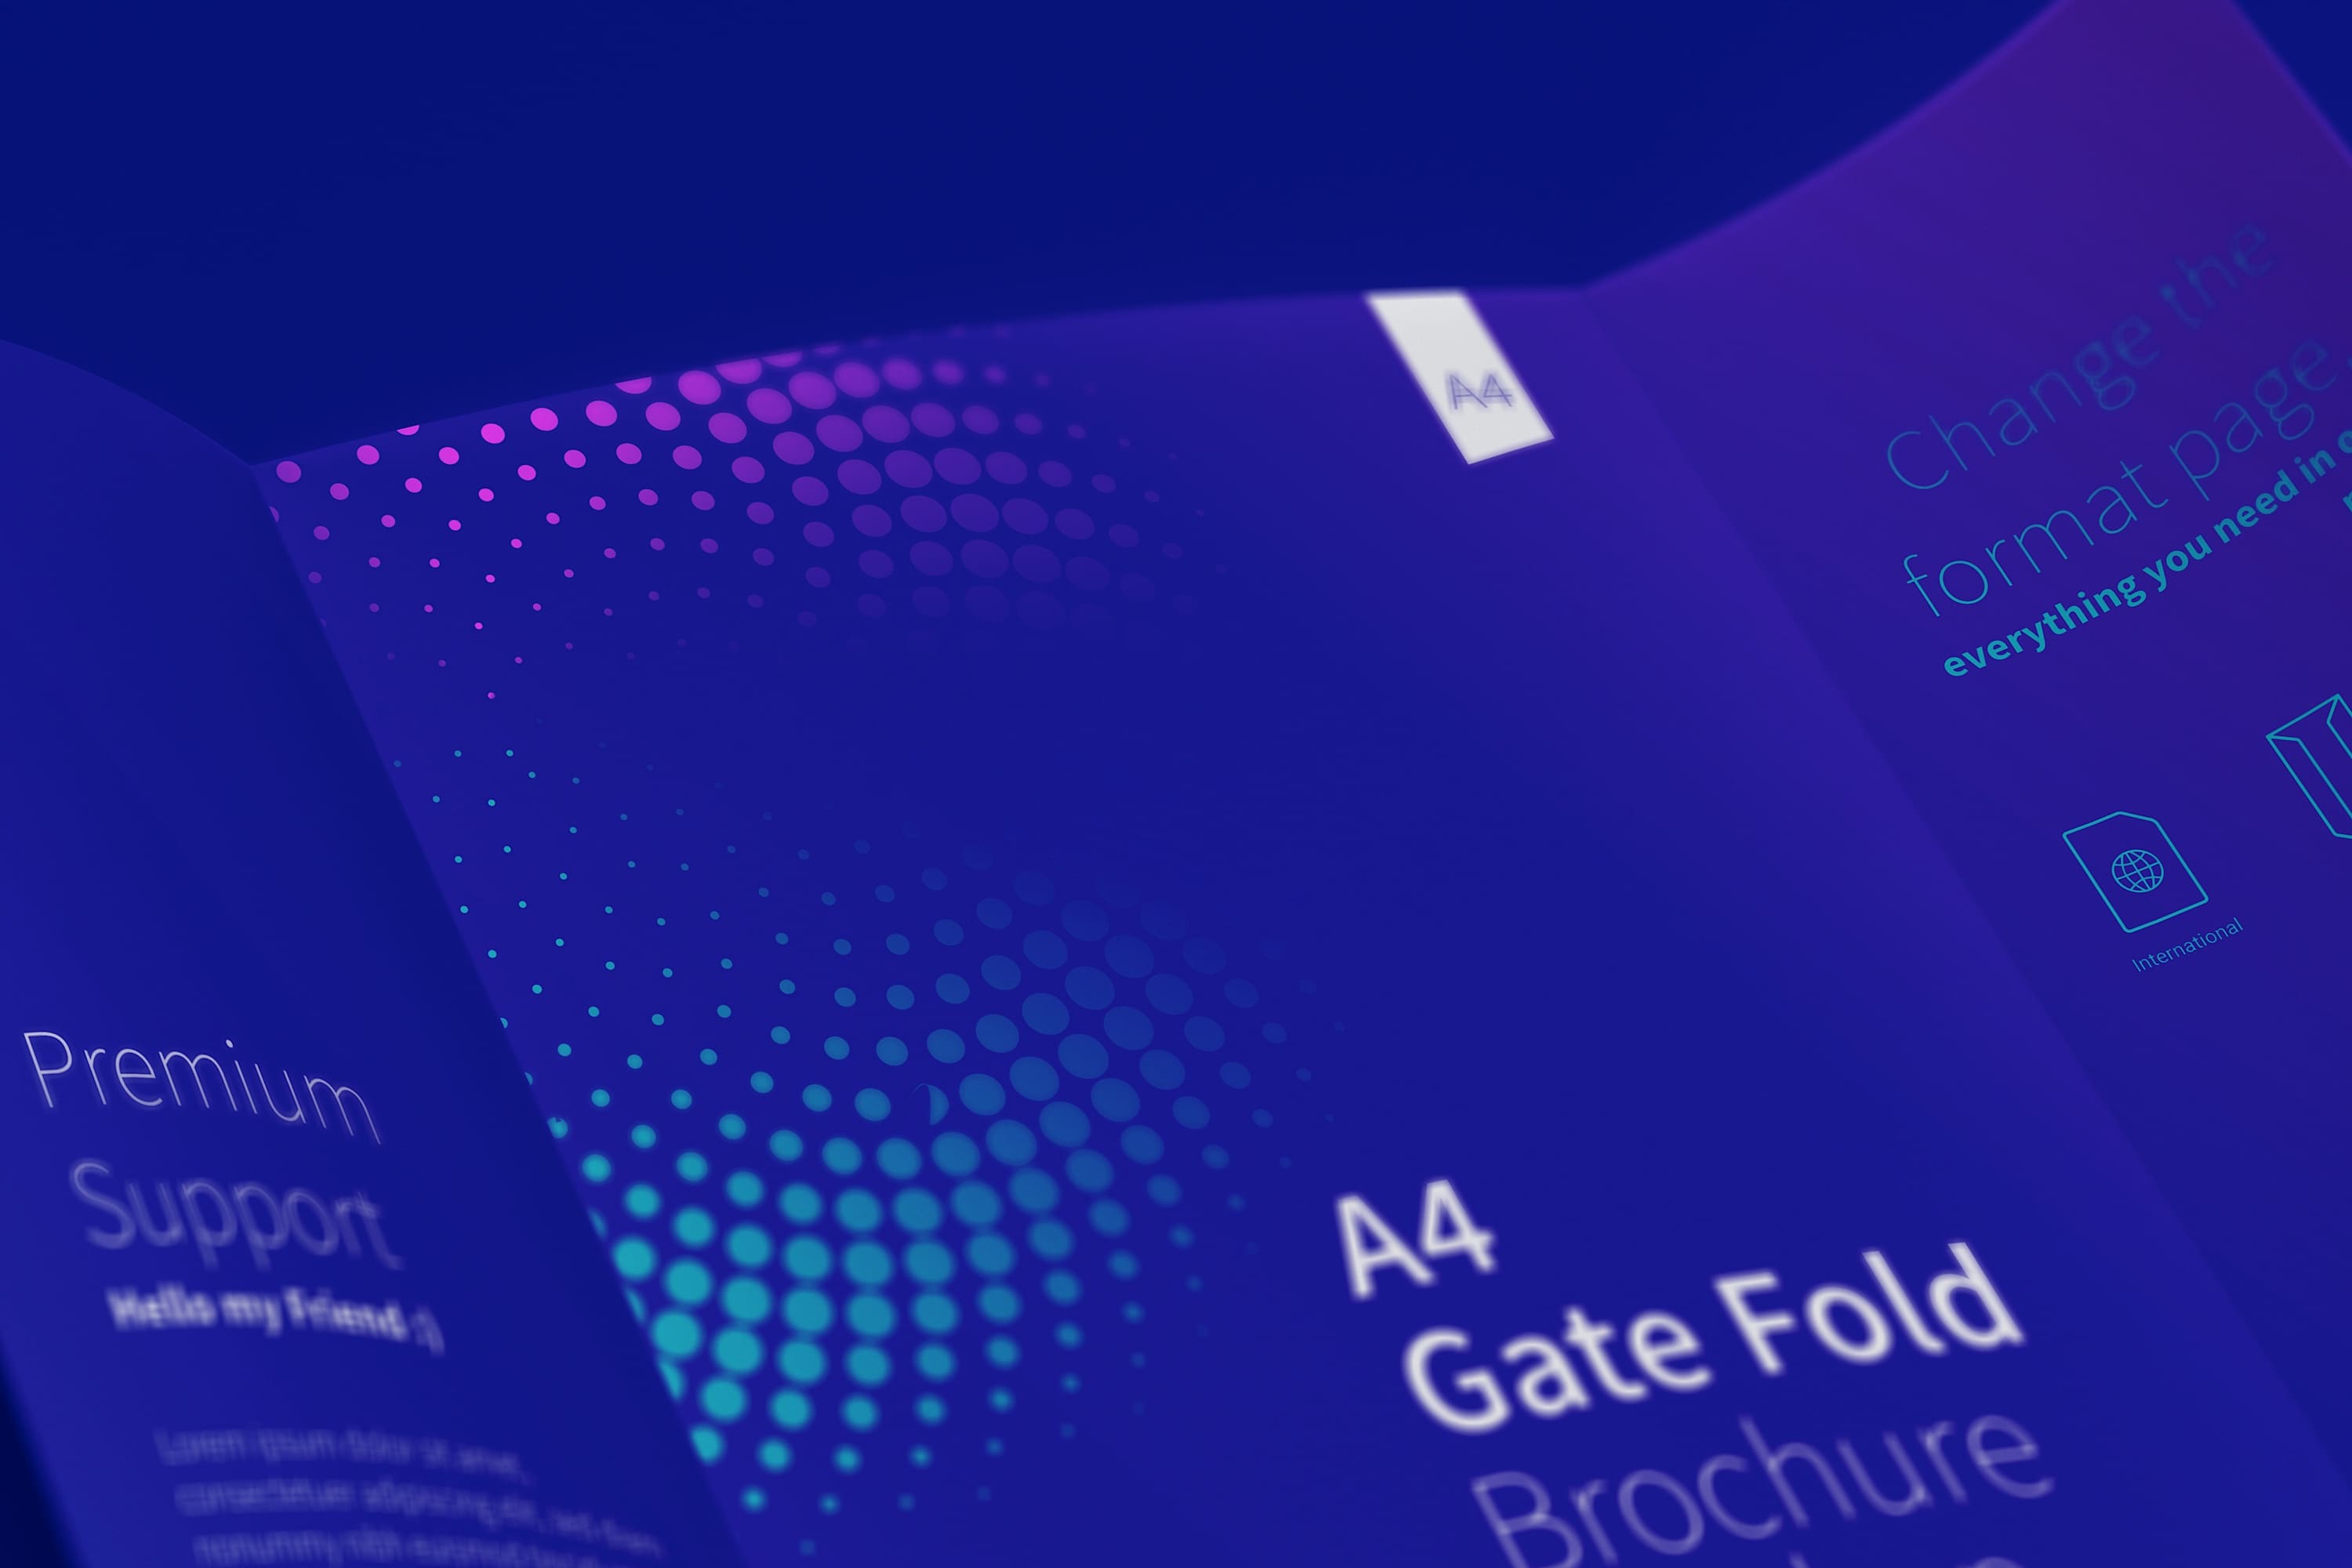 A4大小对折折叠企业宣传单设计效果图样机04 A4 Gate Fold Brochure Mockup 04插图(4)